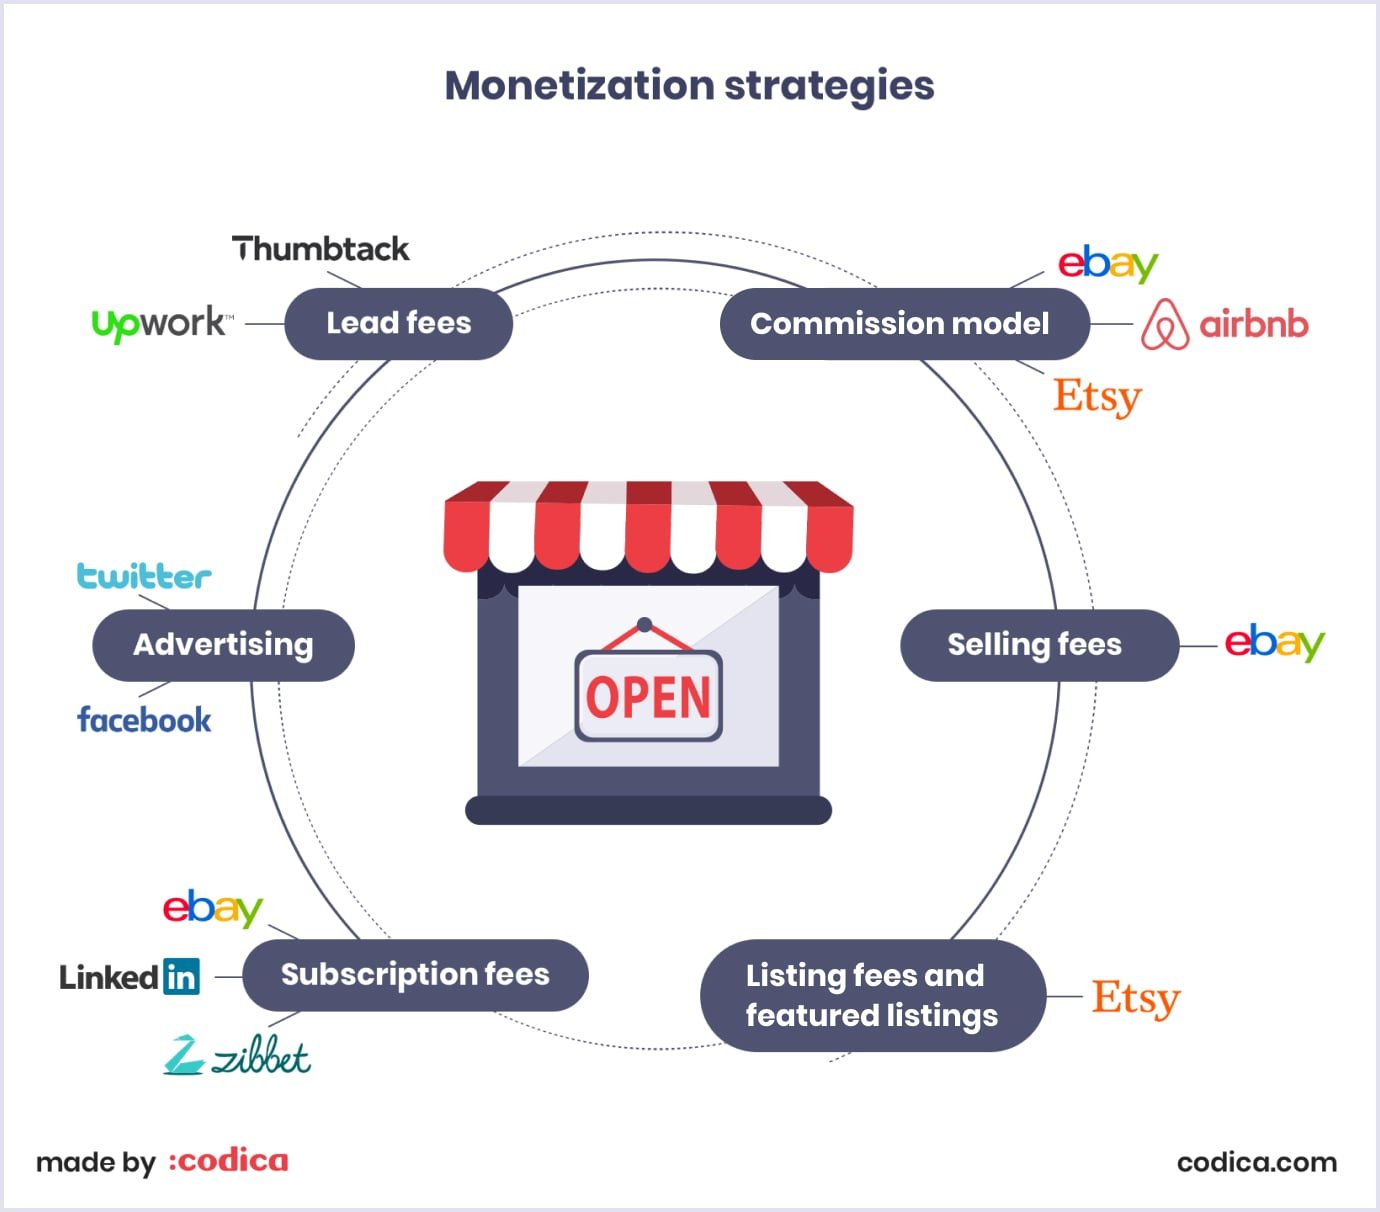 monetization strategies for peer-to-peer marketplaces